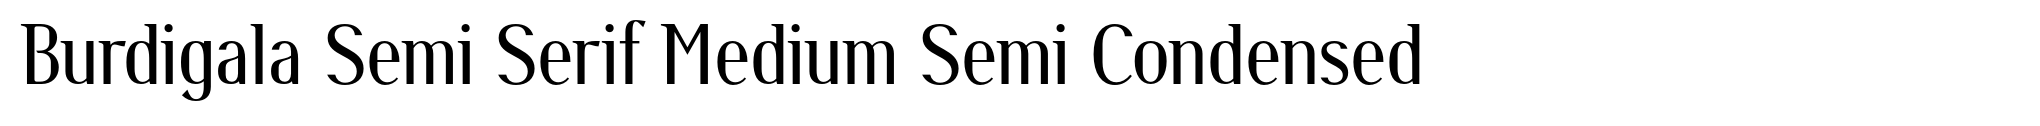 Burdigala Semi Serif Medium Semi Condensed image